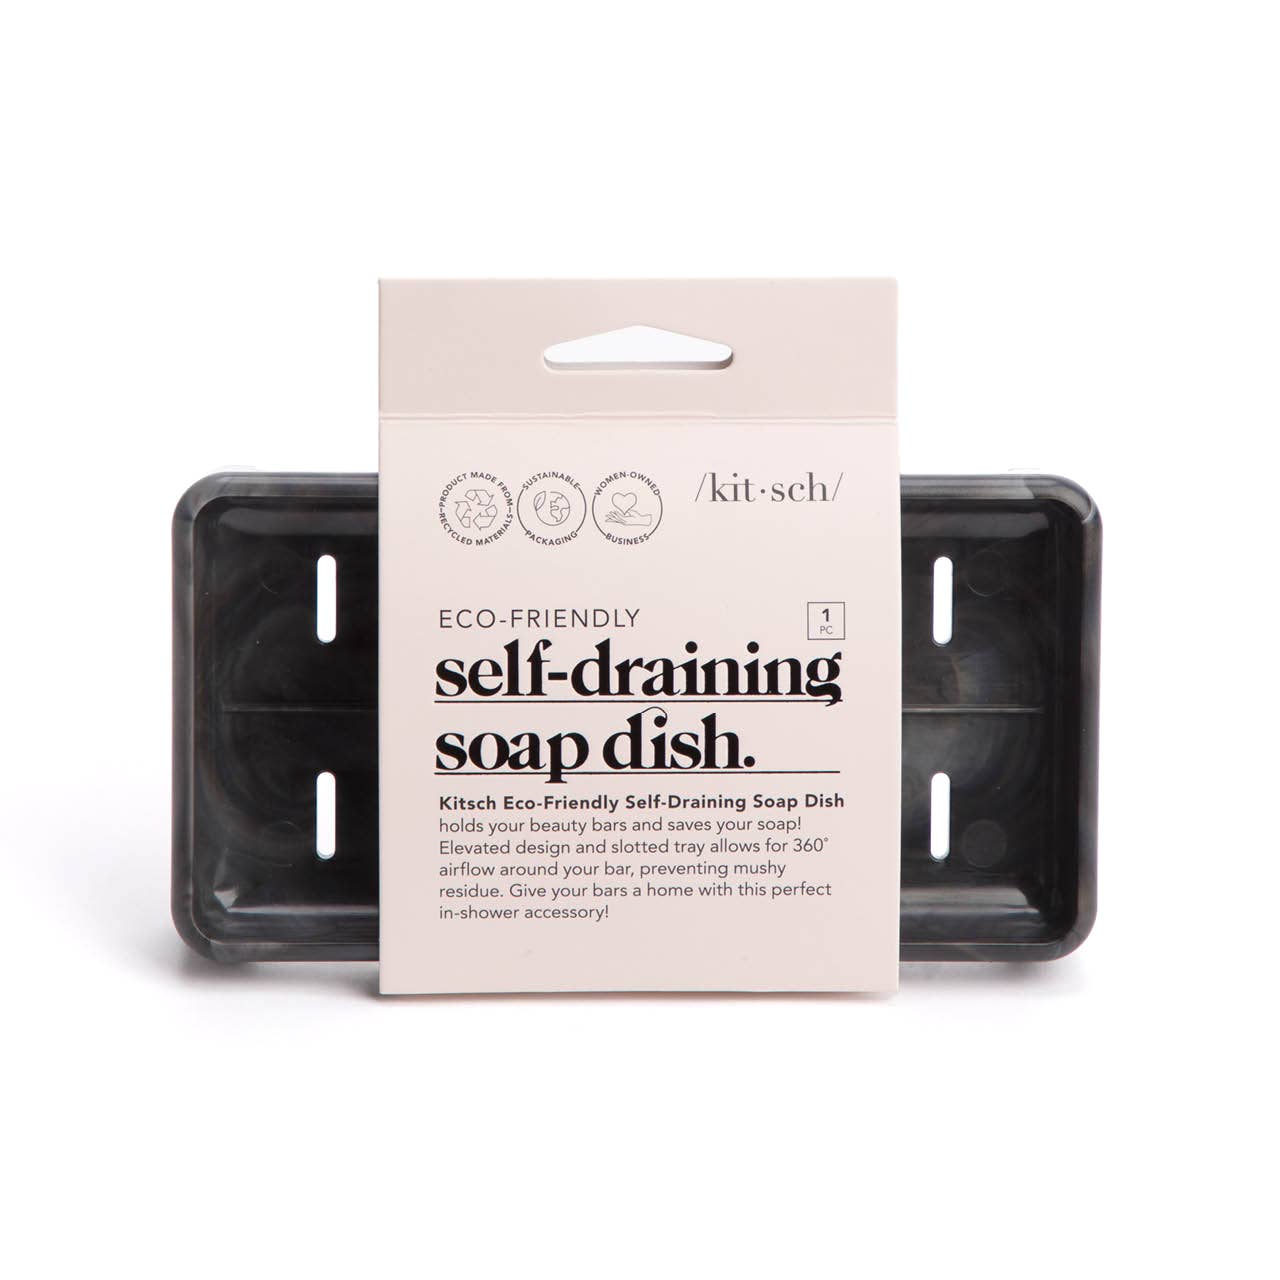 Self-Draining Soap Dish Core KITSCH